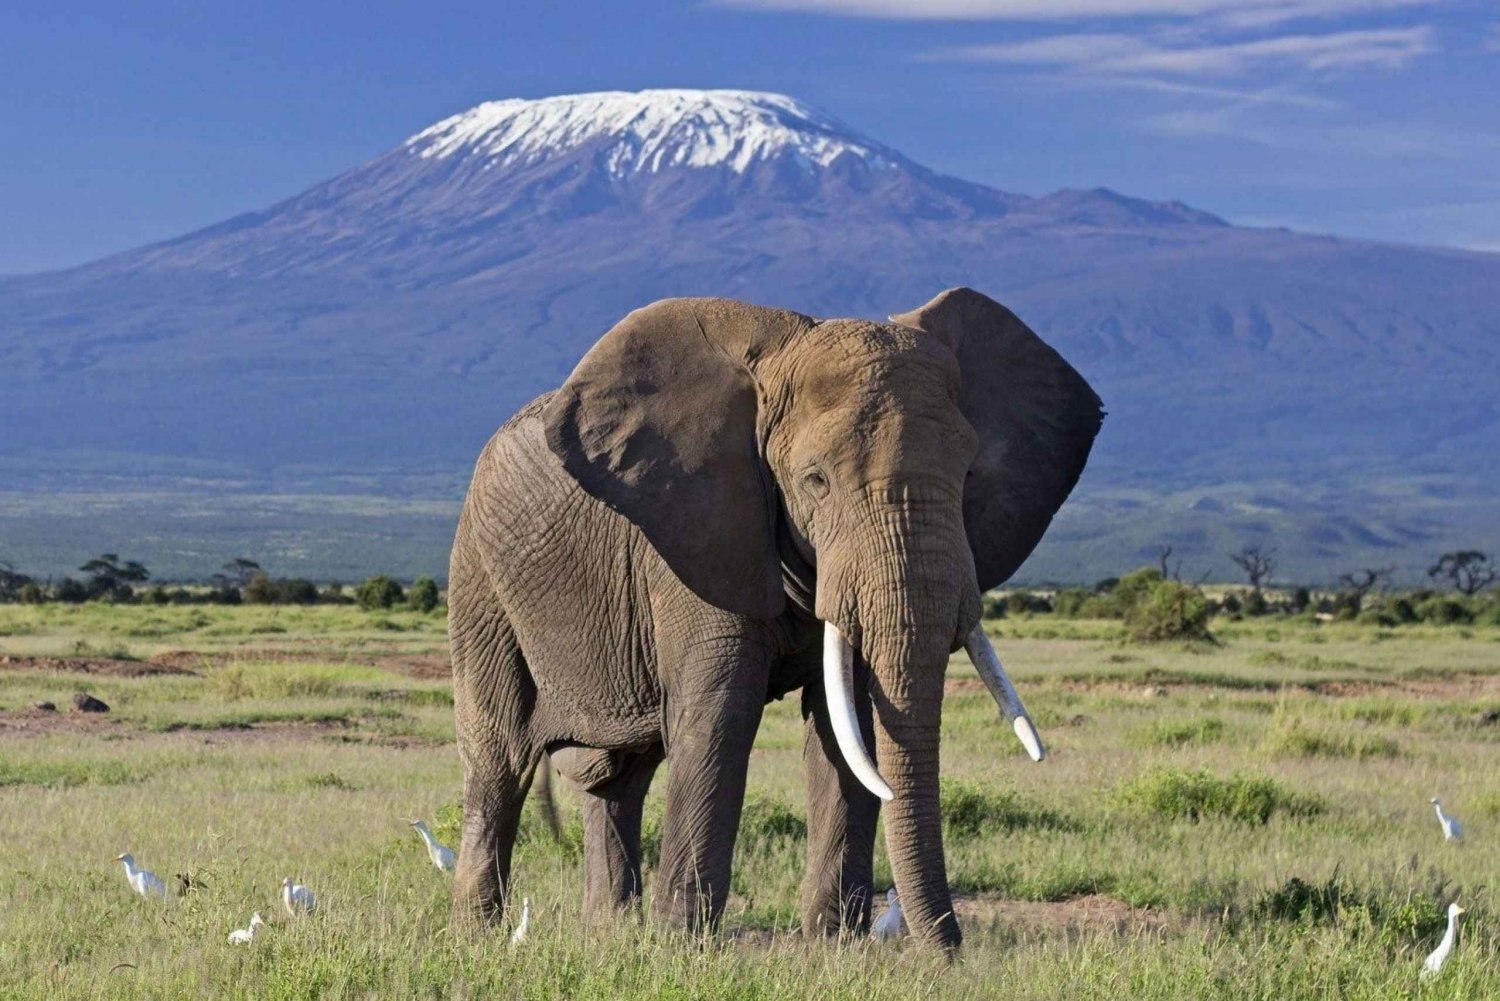 6-dniowe safari w Kenii do Amboseli i Tsavo West & East.